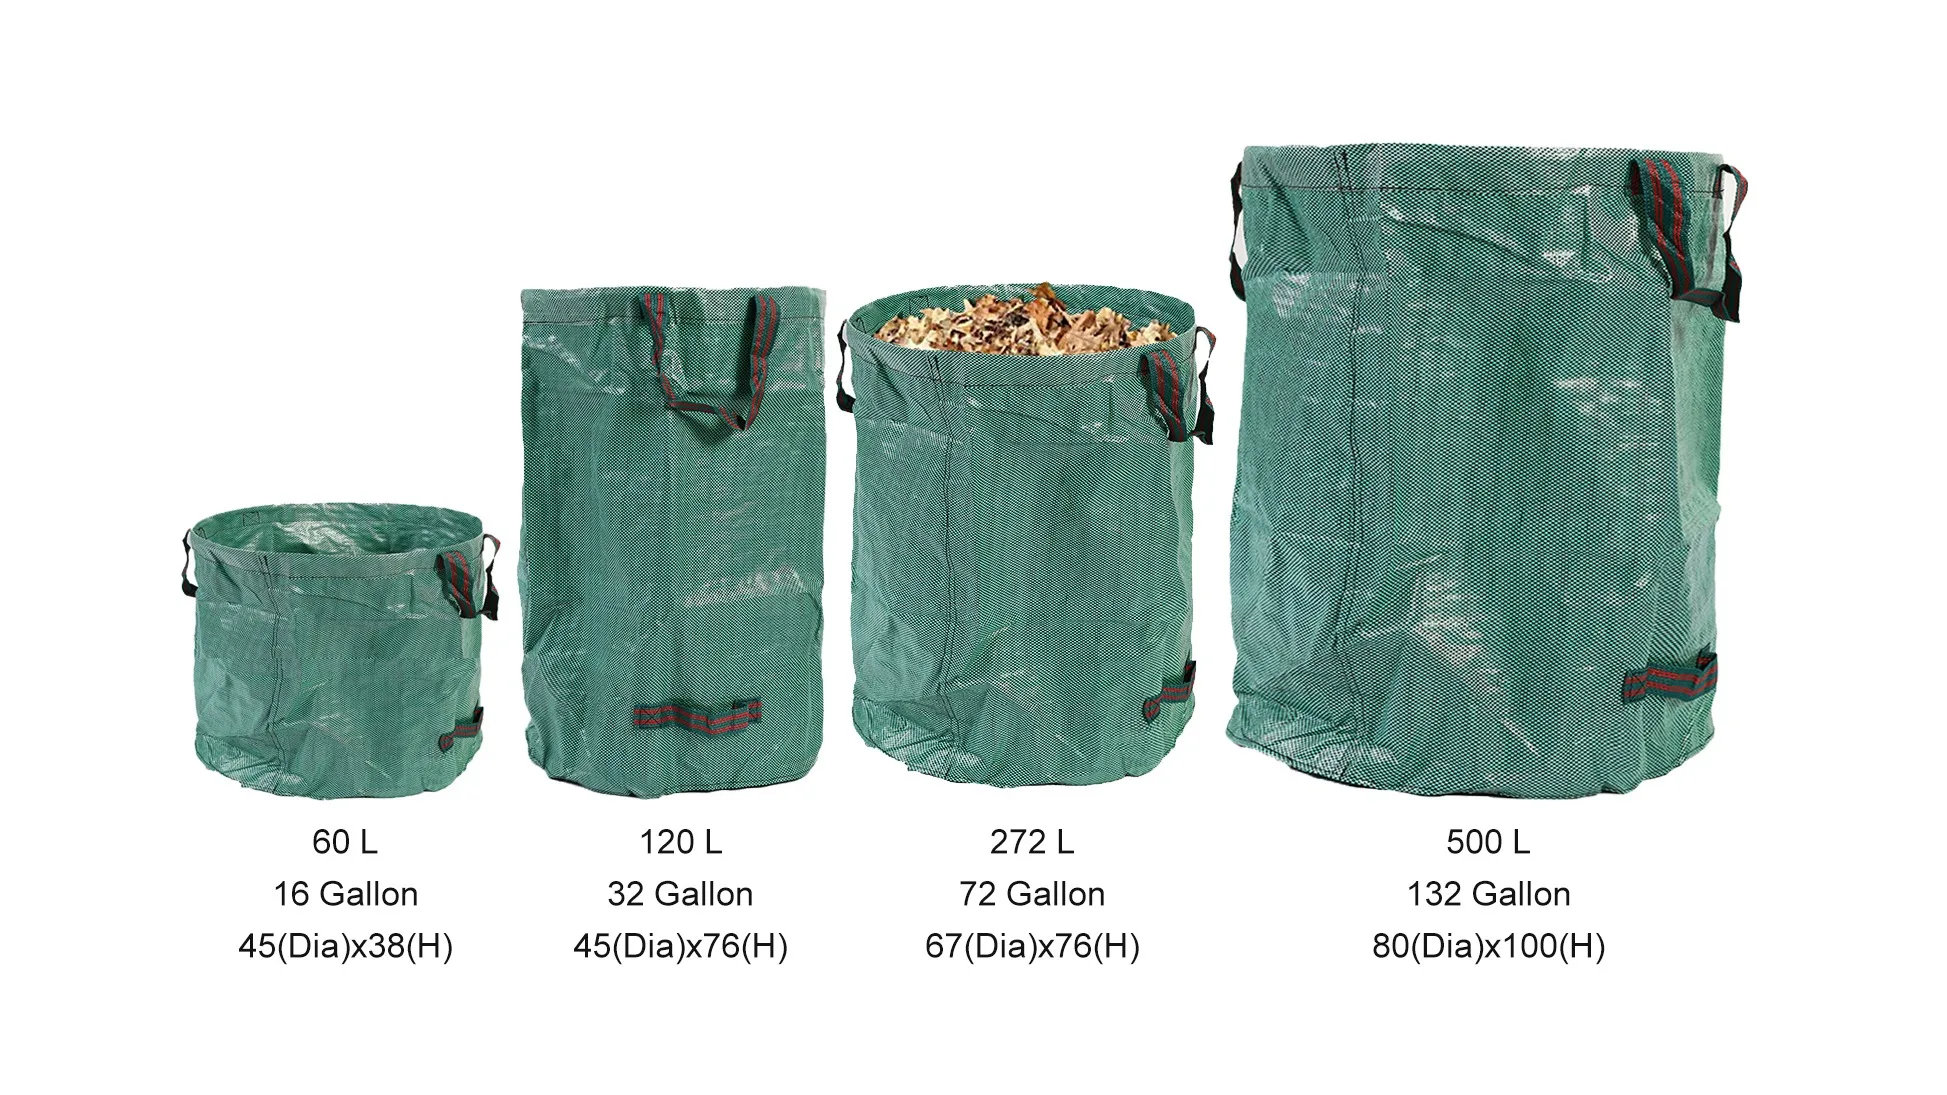 72 Gallon Large Reusable Garden Waste Bags Waterproof Leaf Lawn